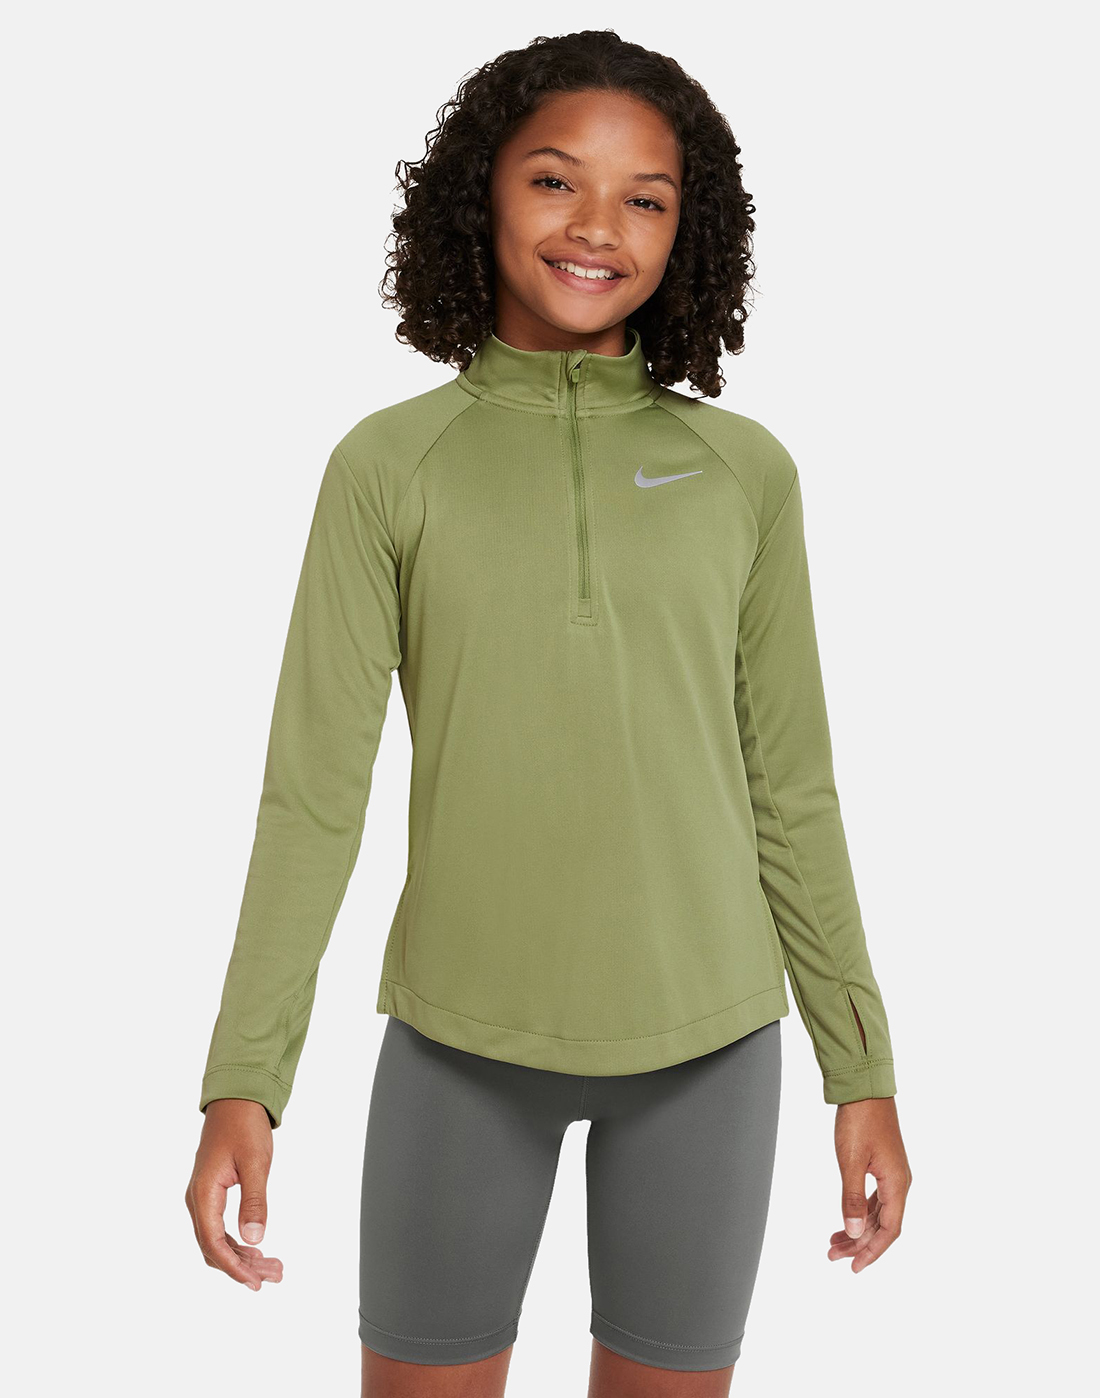 Nike Older Girls Dry Fit Half Zip Top - Green | Life Style Sports UK